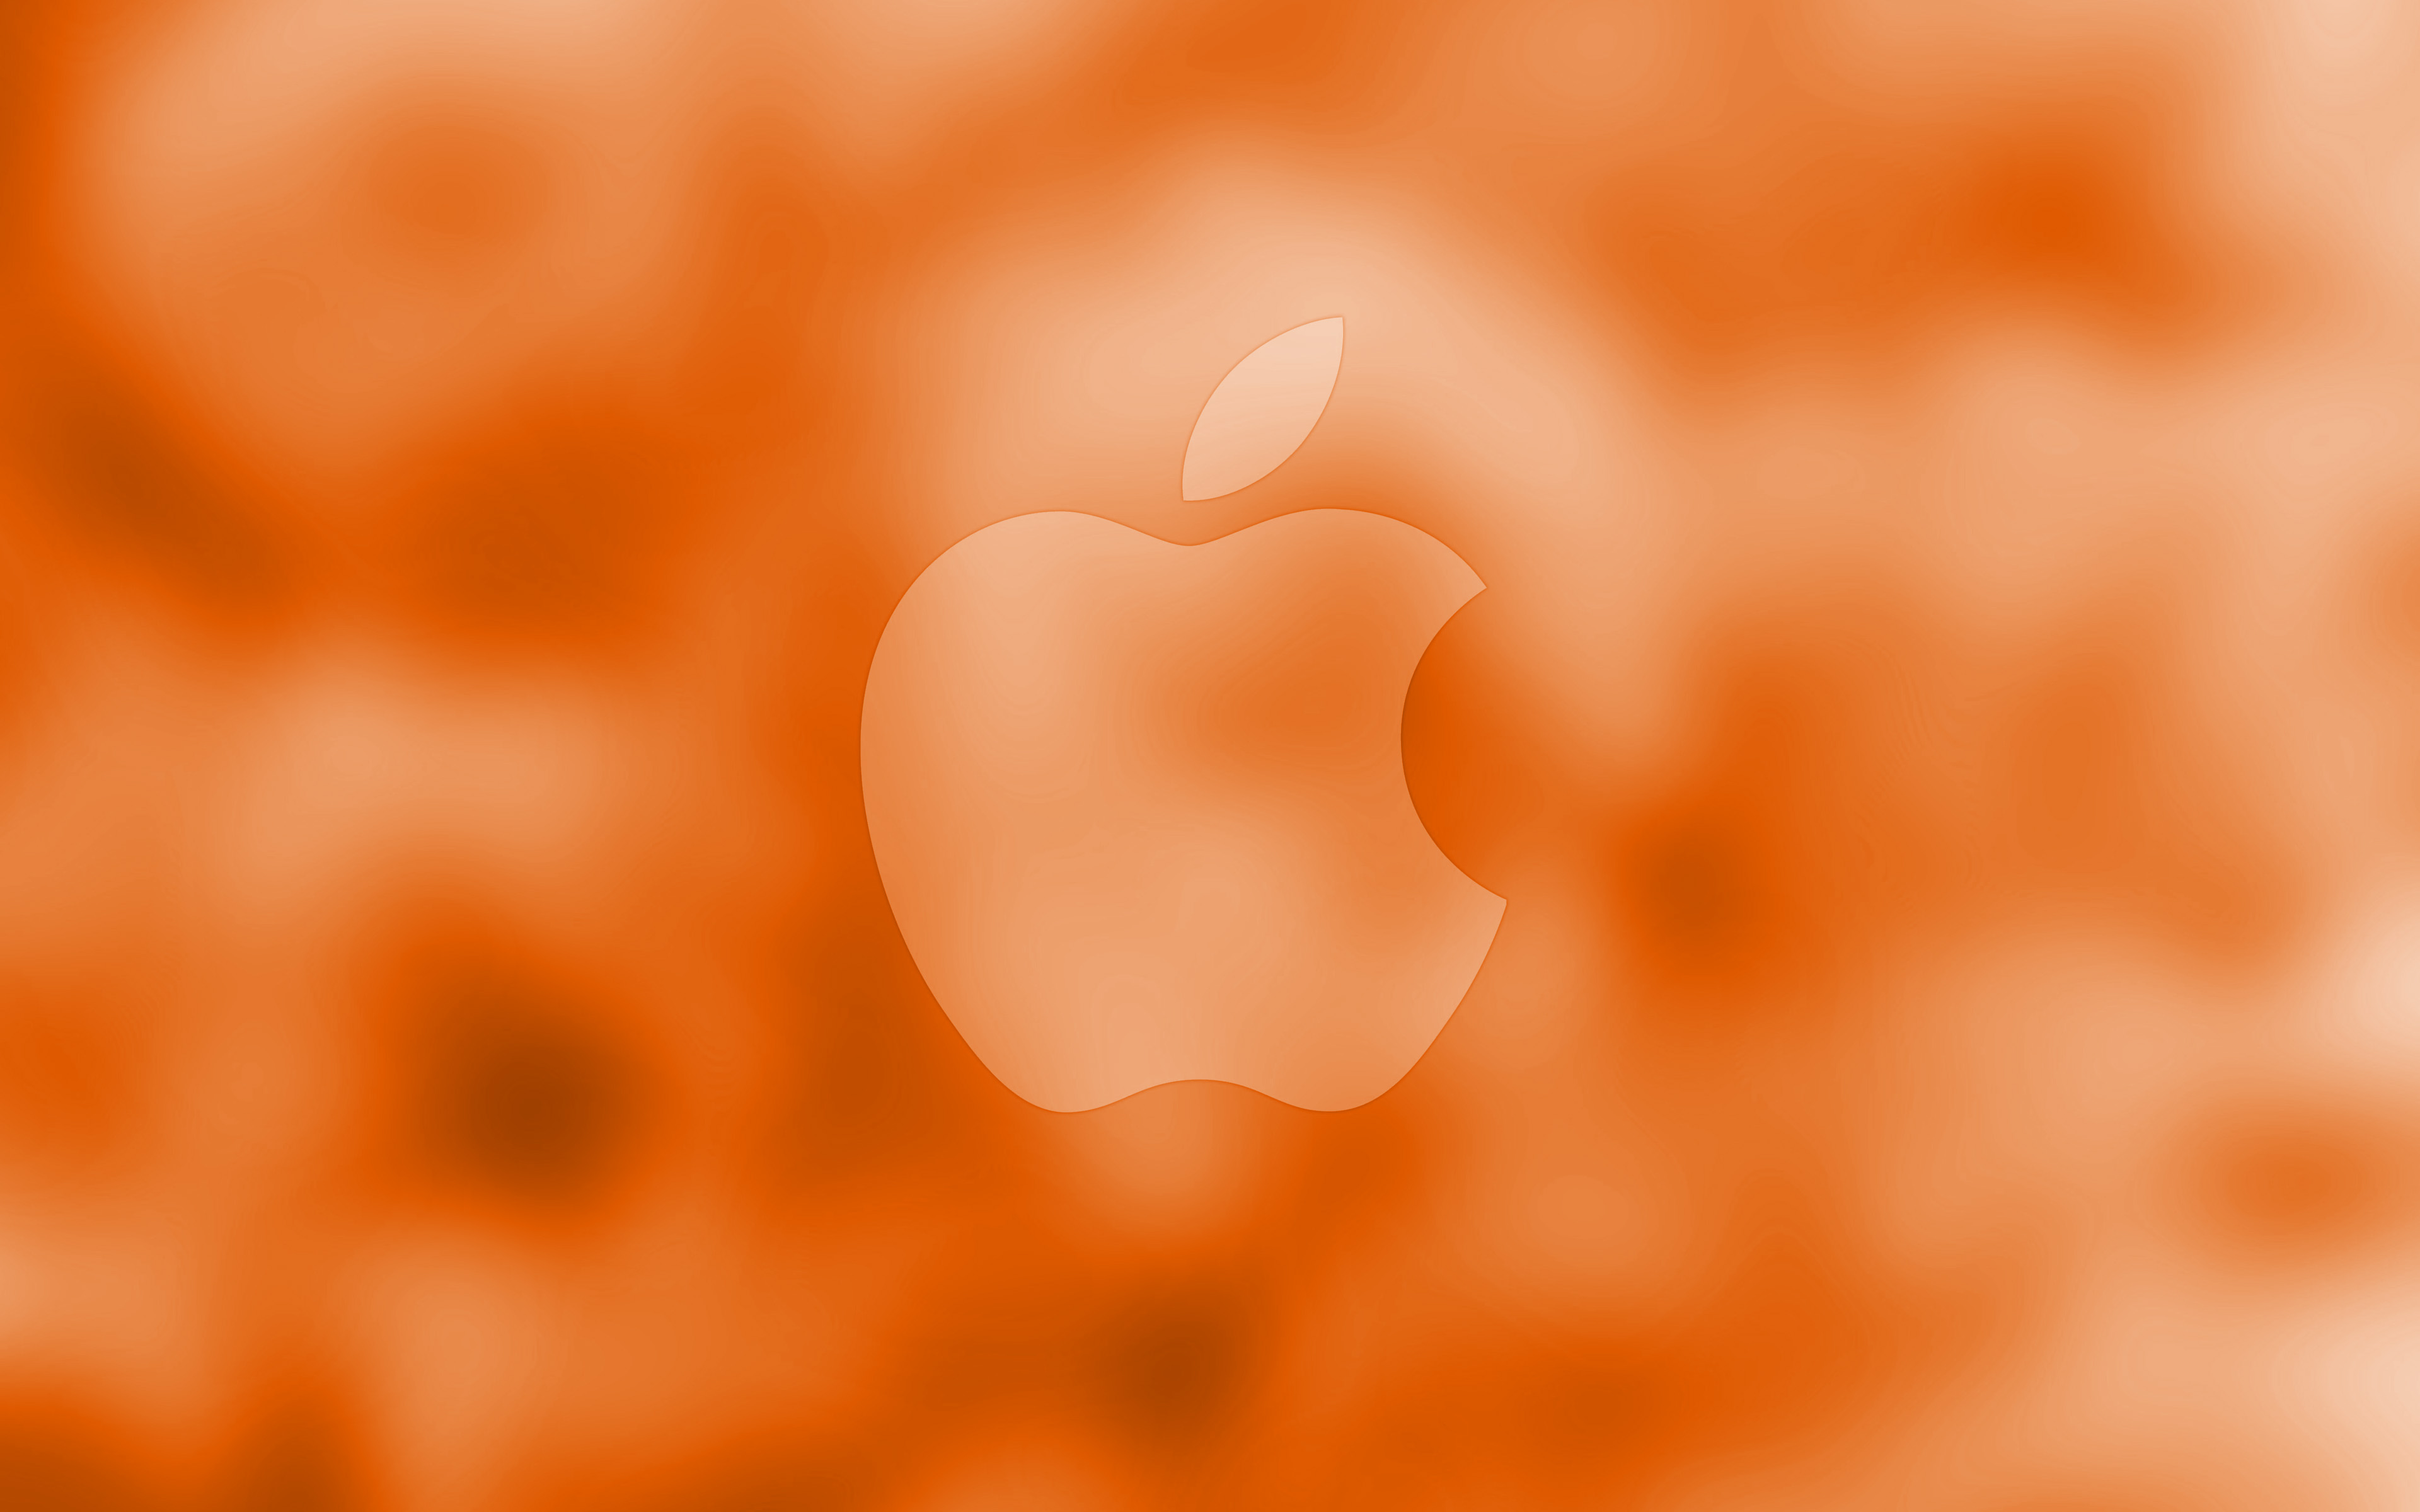 Download wallpaper Apple logo, 4k orange blurred background, Apple, minimal, Apple orange logo, artwork for desktop with resolution 3840x2400. High Quality HD picture wallpaper